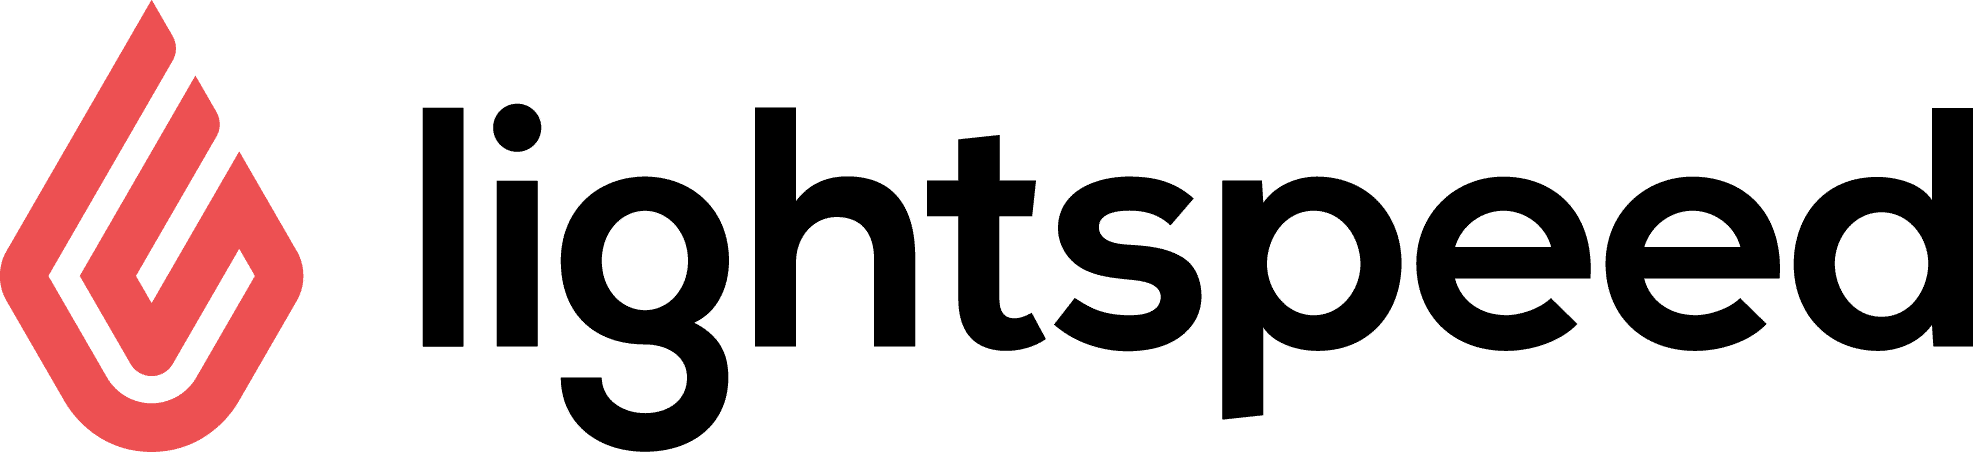 Lightspeed-logo.png